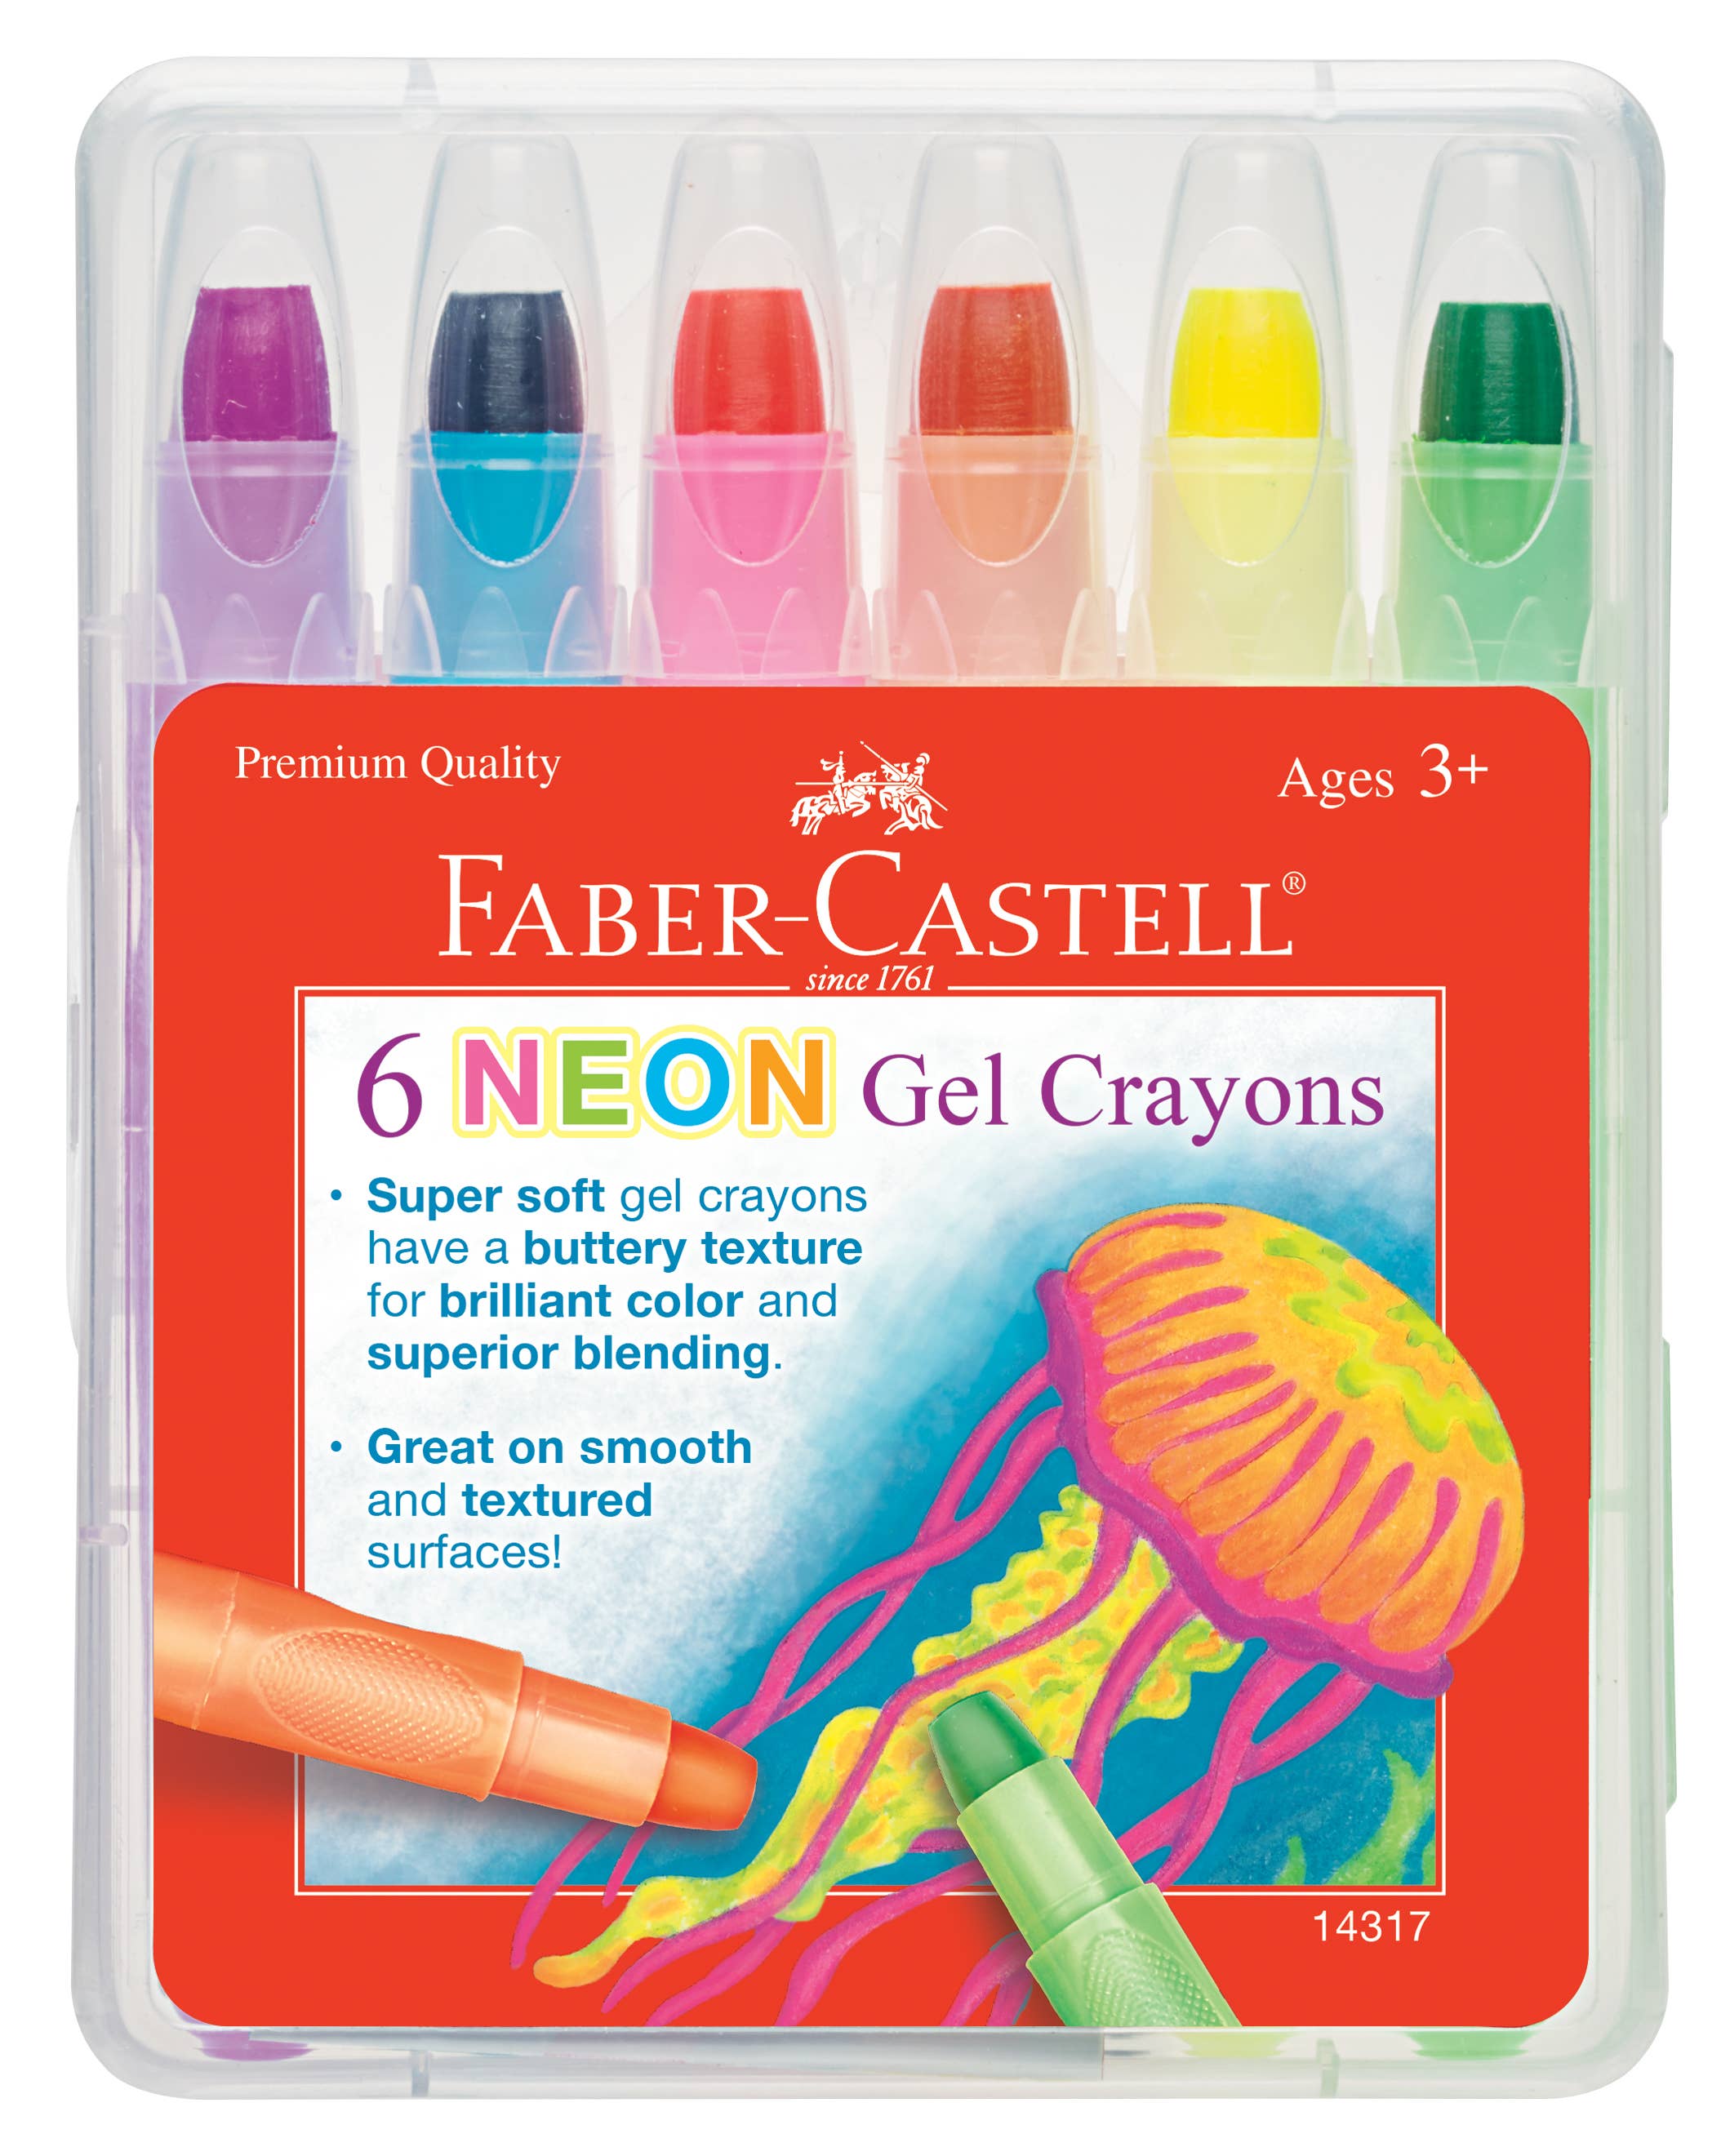 6 Neon Gel Crayons in Storage Case